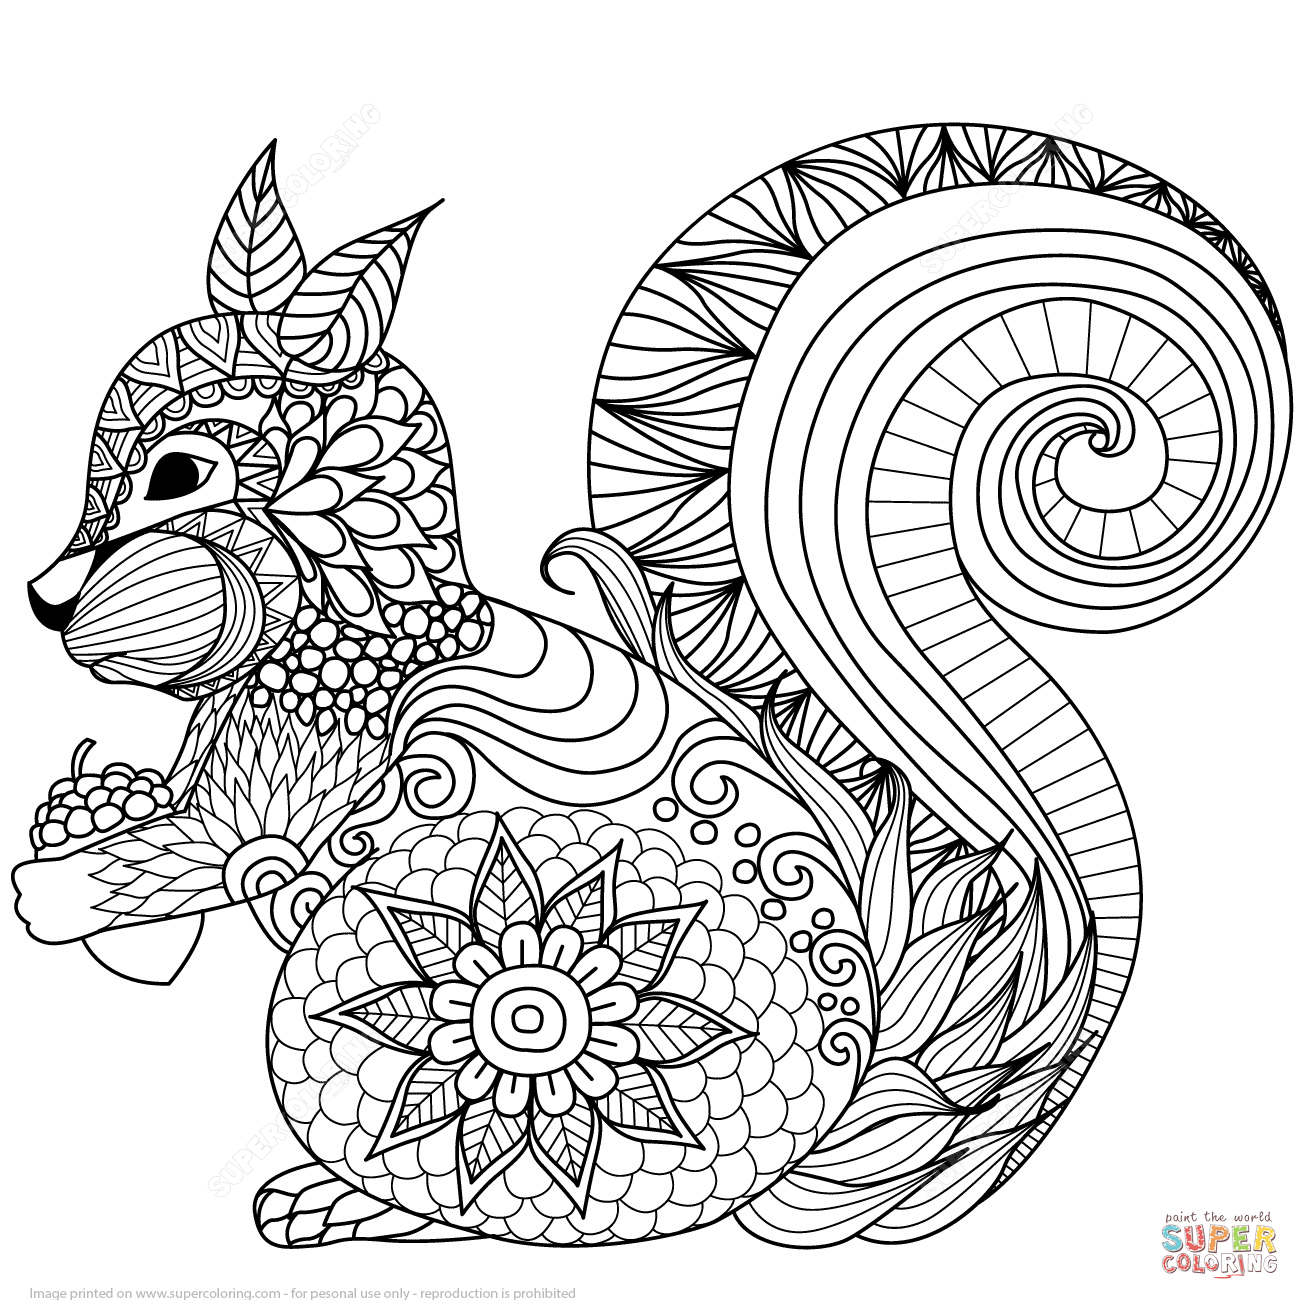 Animal Mandala Coloring Pages at GetDrawings | Free download